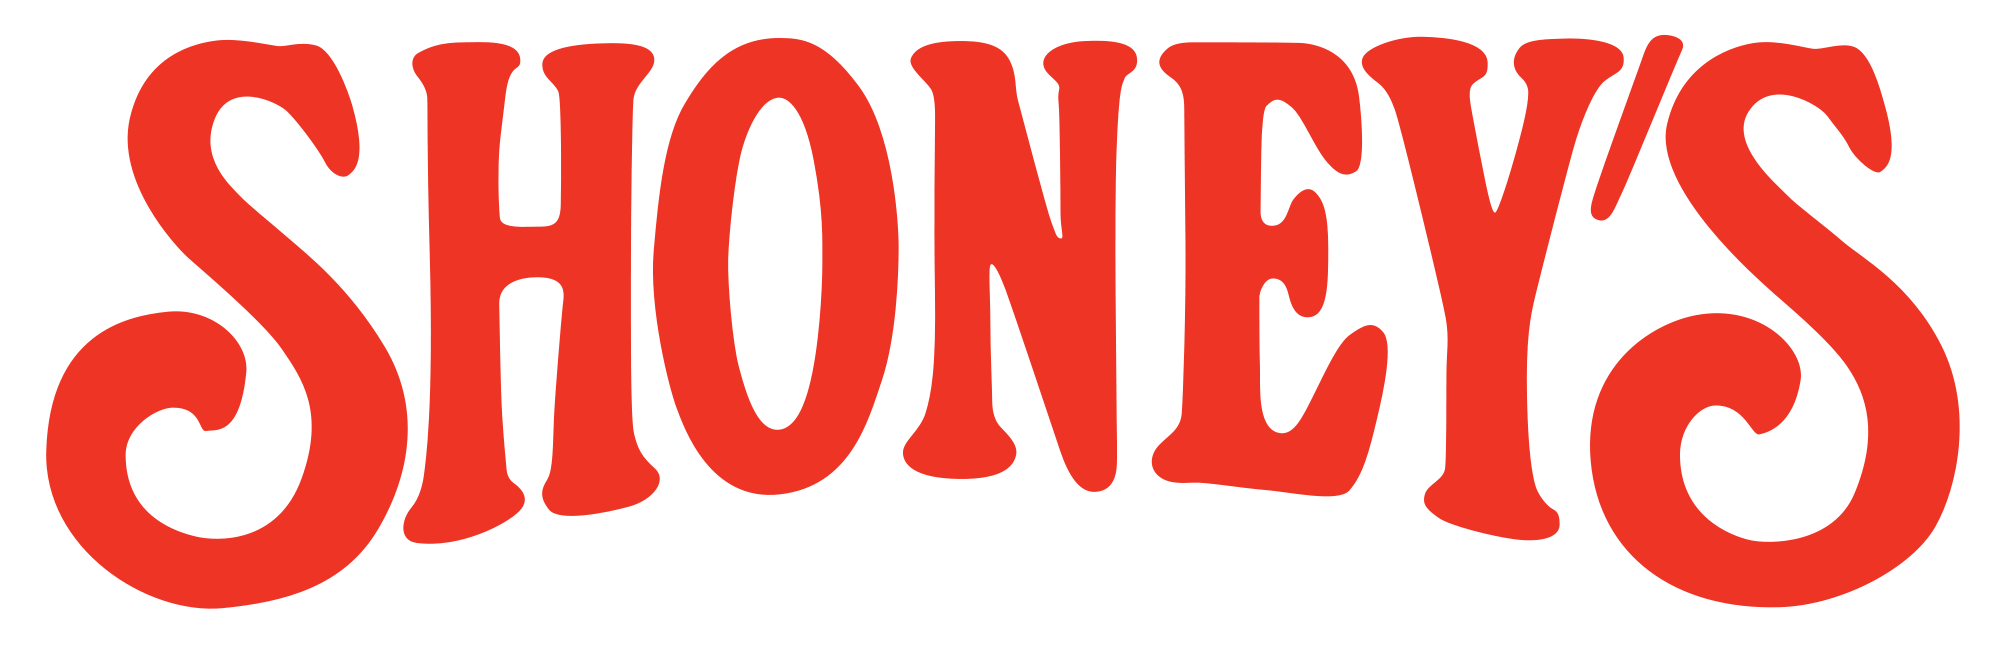 2000px-Shoneys_Logo.png